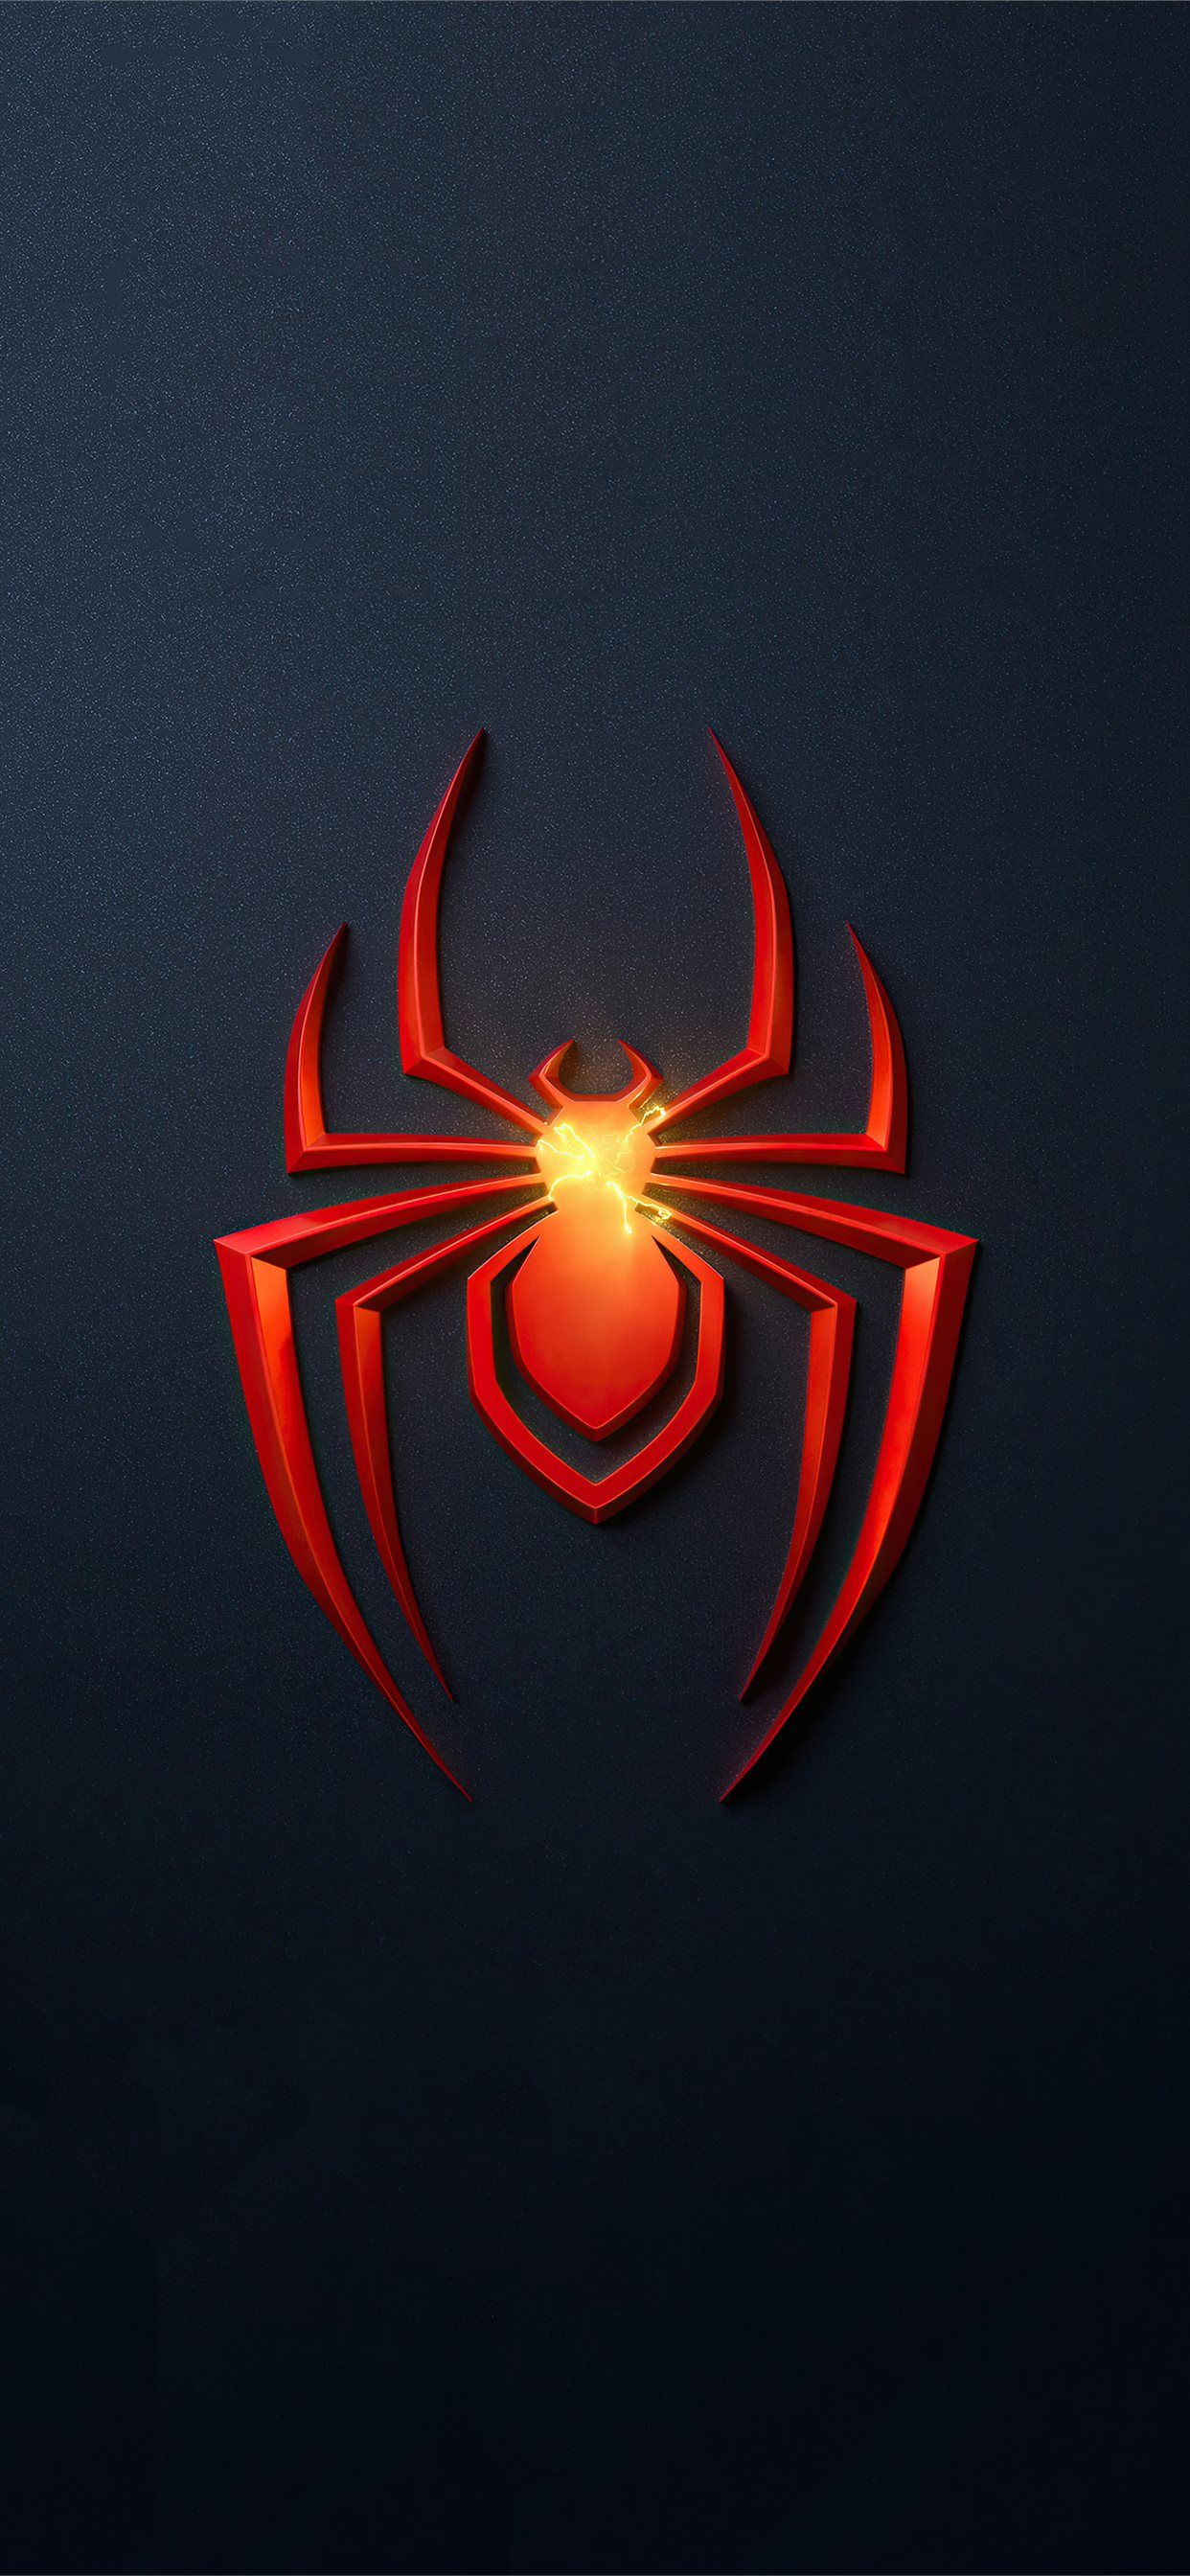 spider man miles morales ps5 game logo 4k iPhone X Wallpaper Free Download